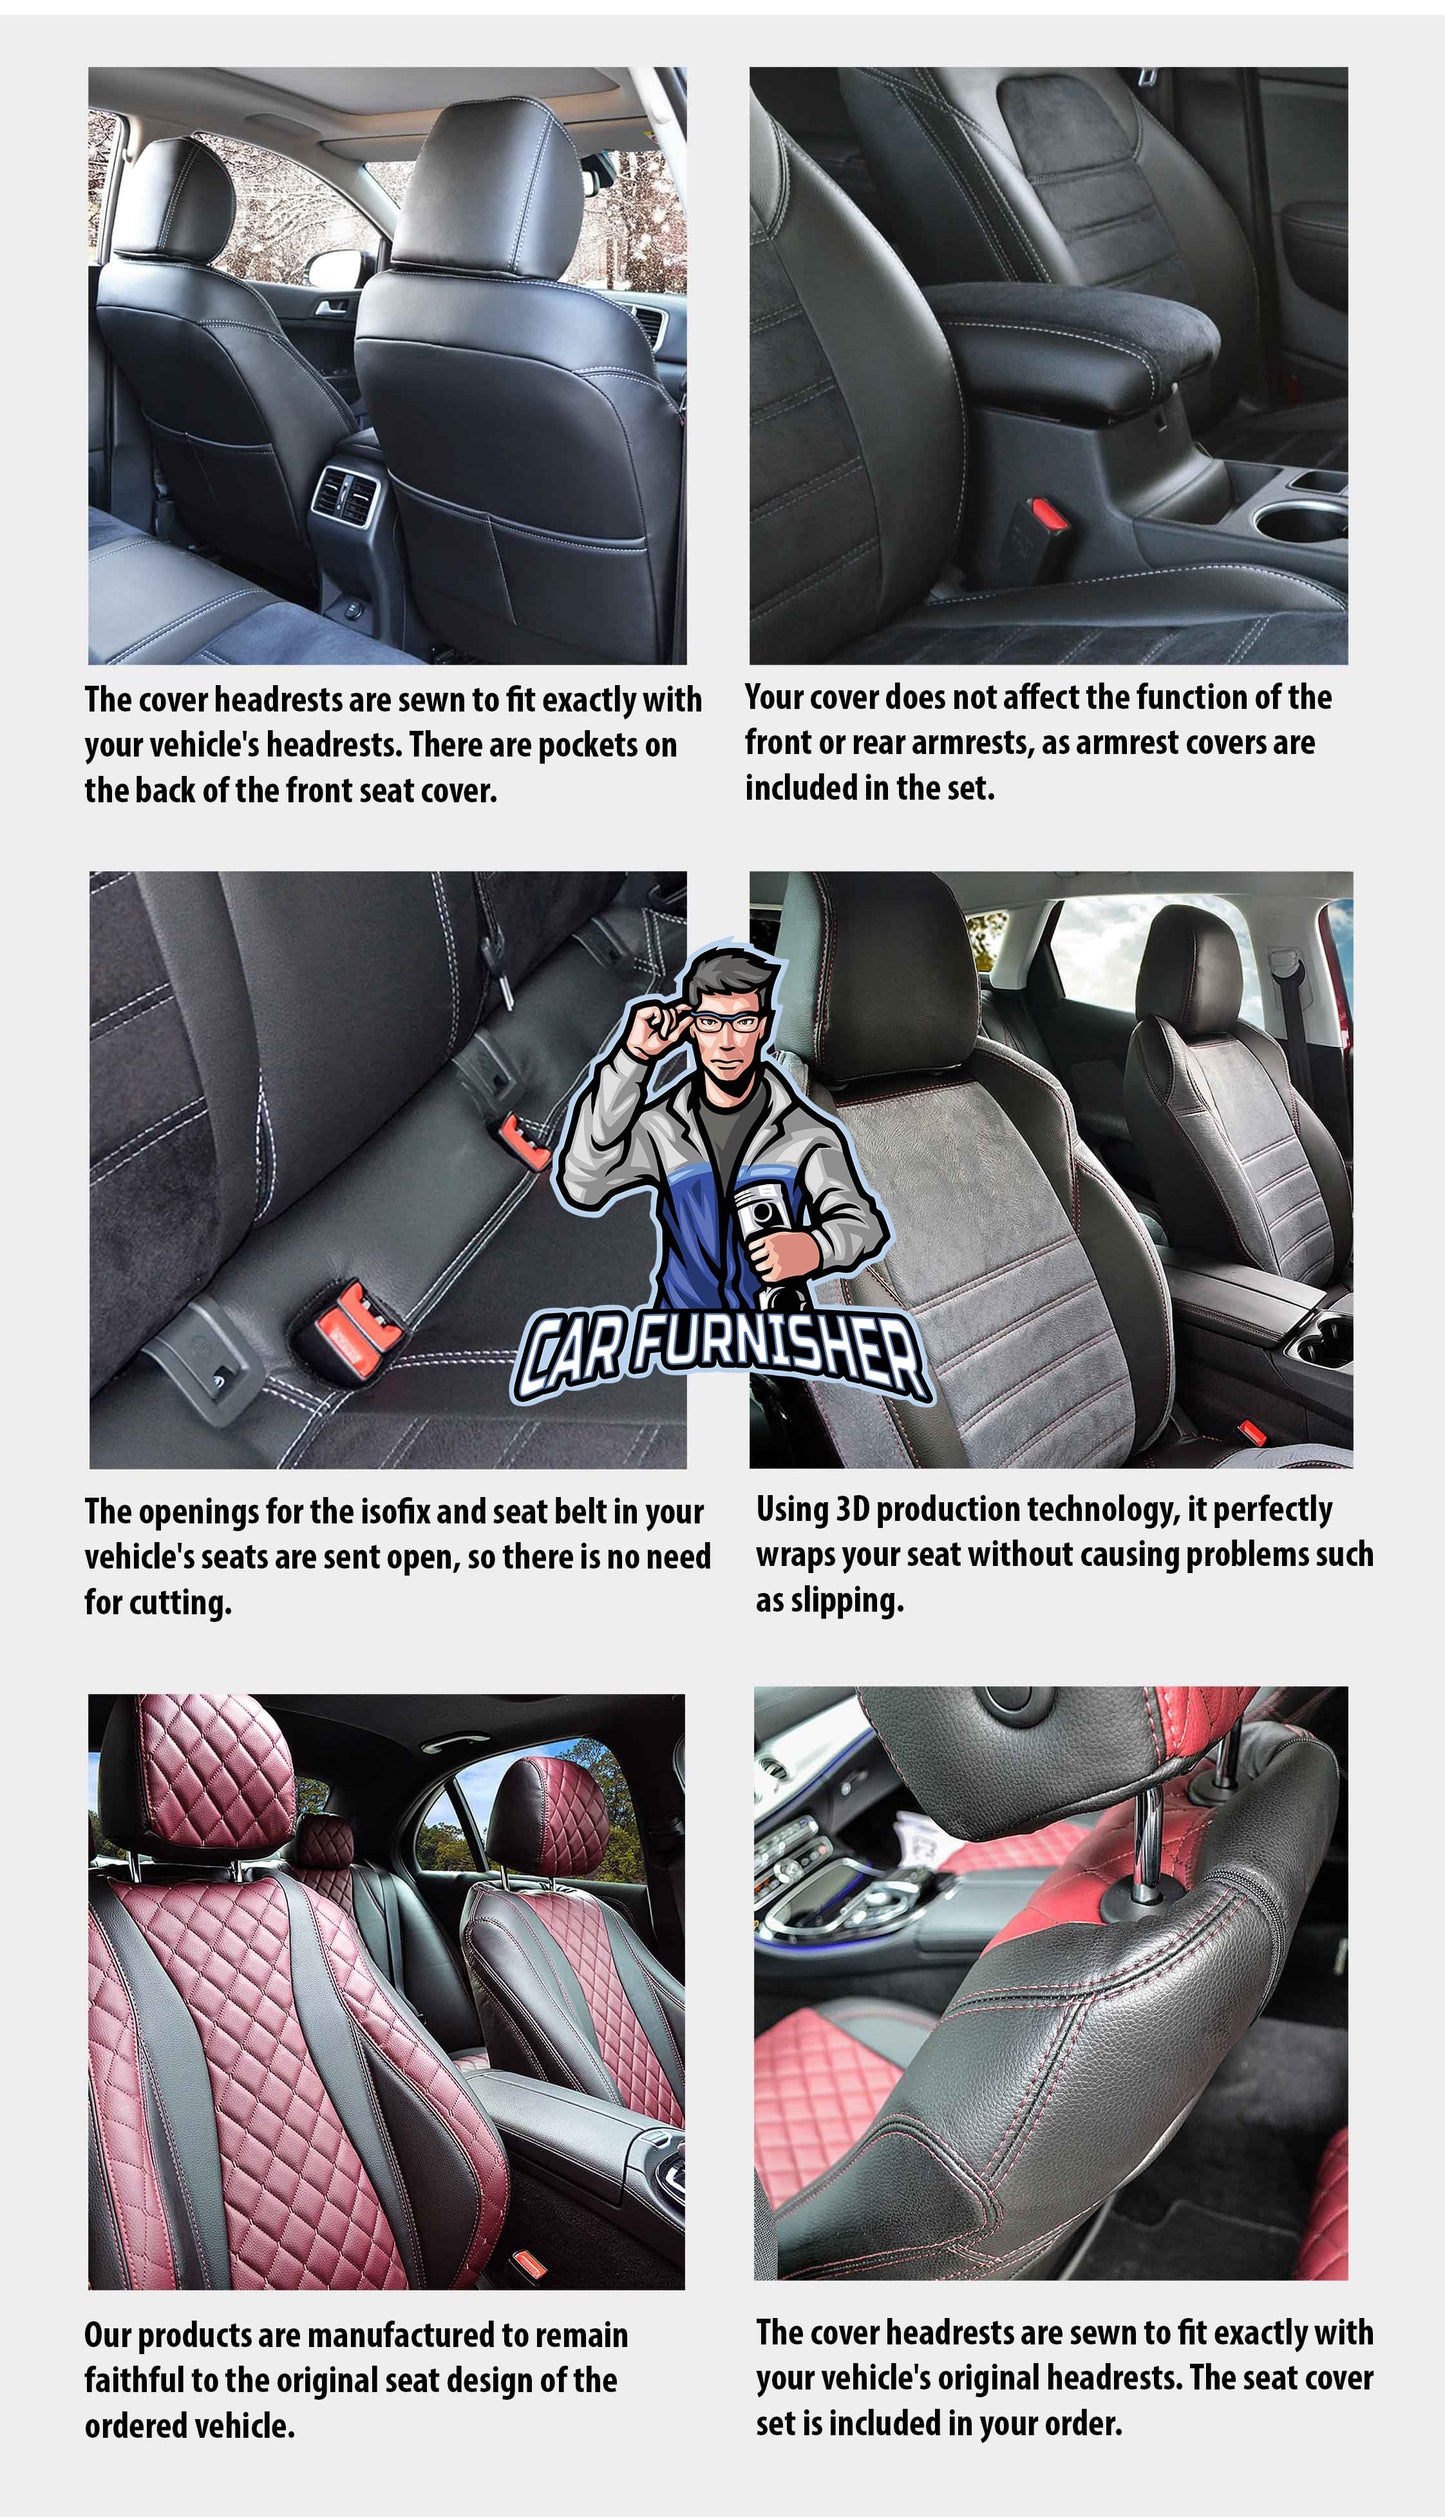 Volkswagen Bora Seat Cover Original Jacquard Design Black Jacquard Fabric